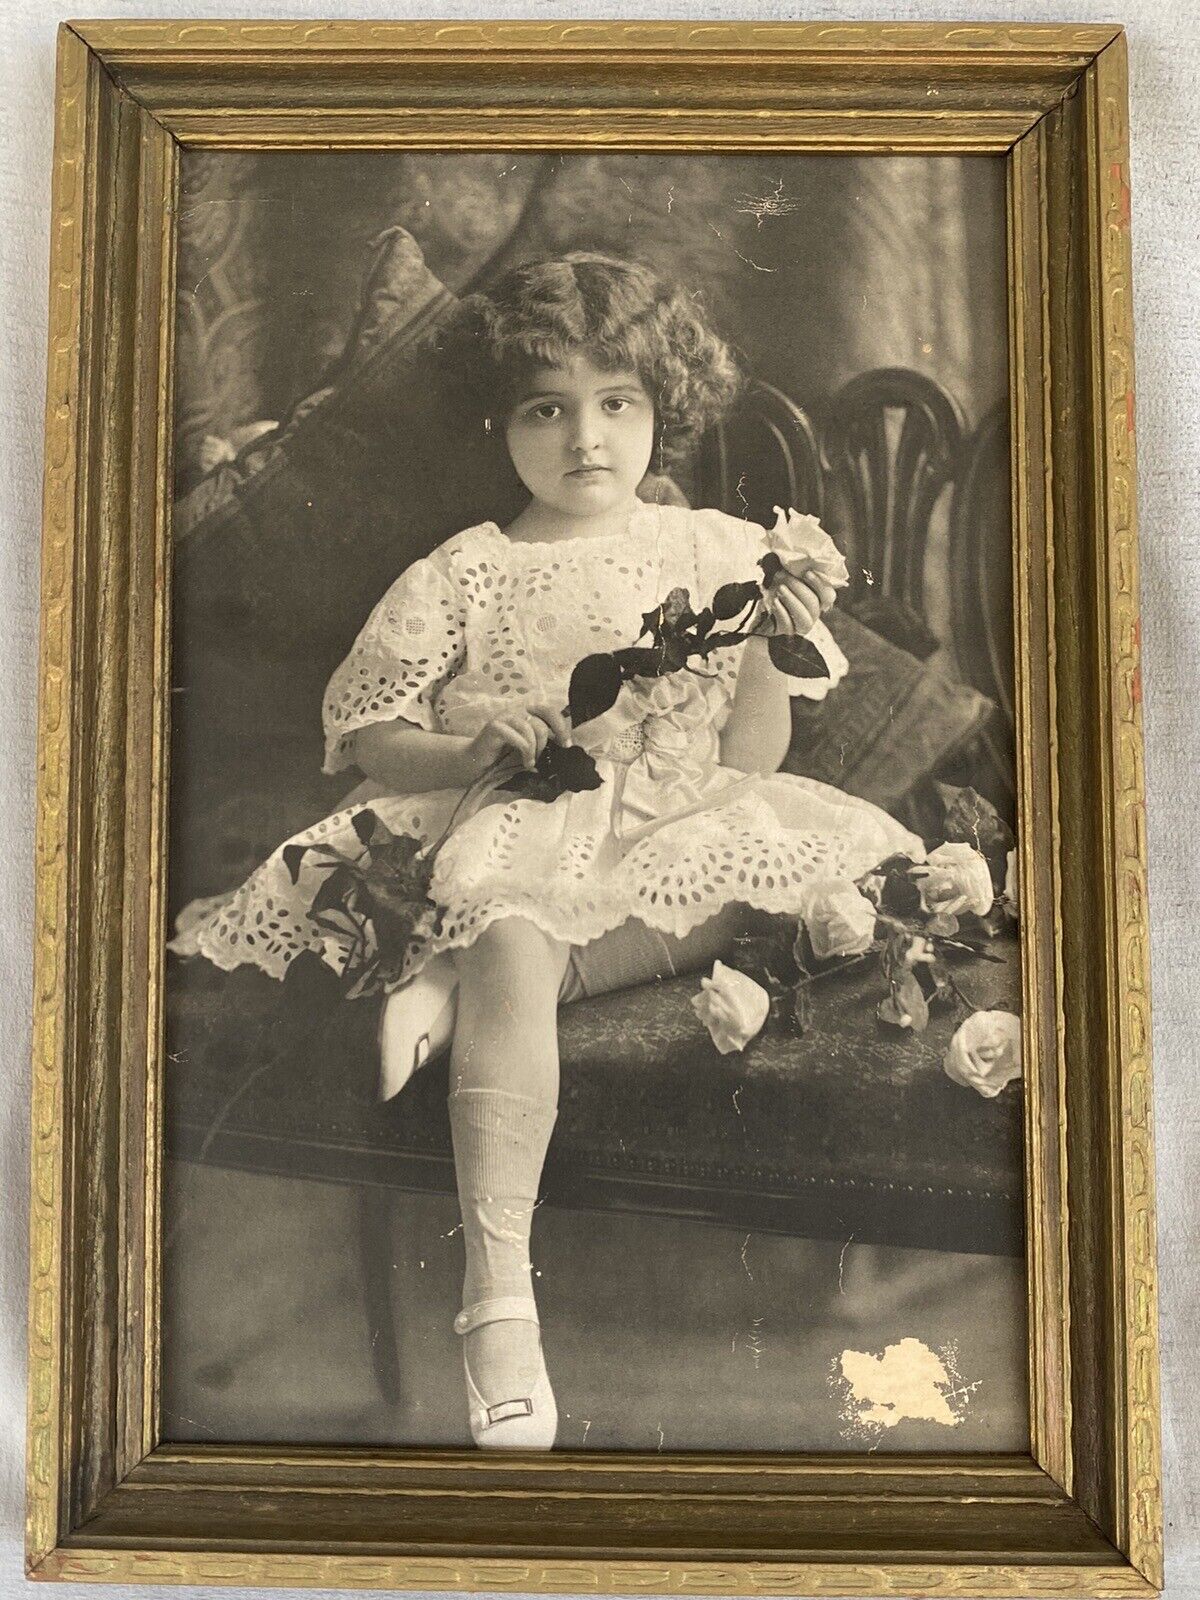 Vtg Victorian Girl Child Setting Holding A Flower Photograph Photo Black & White